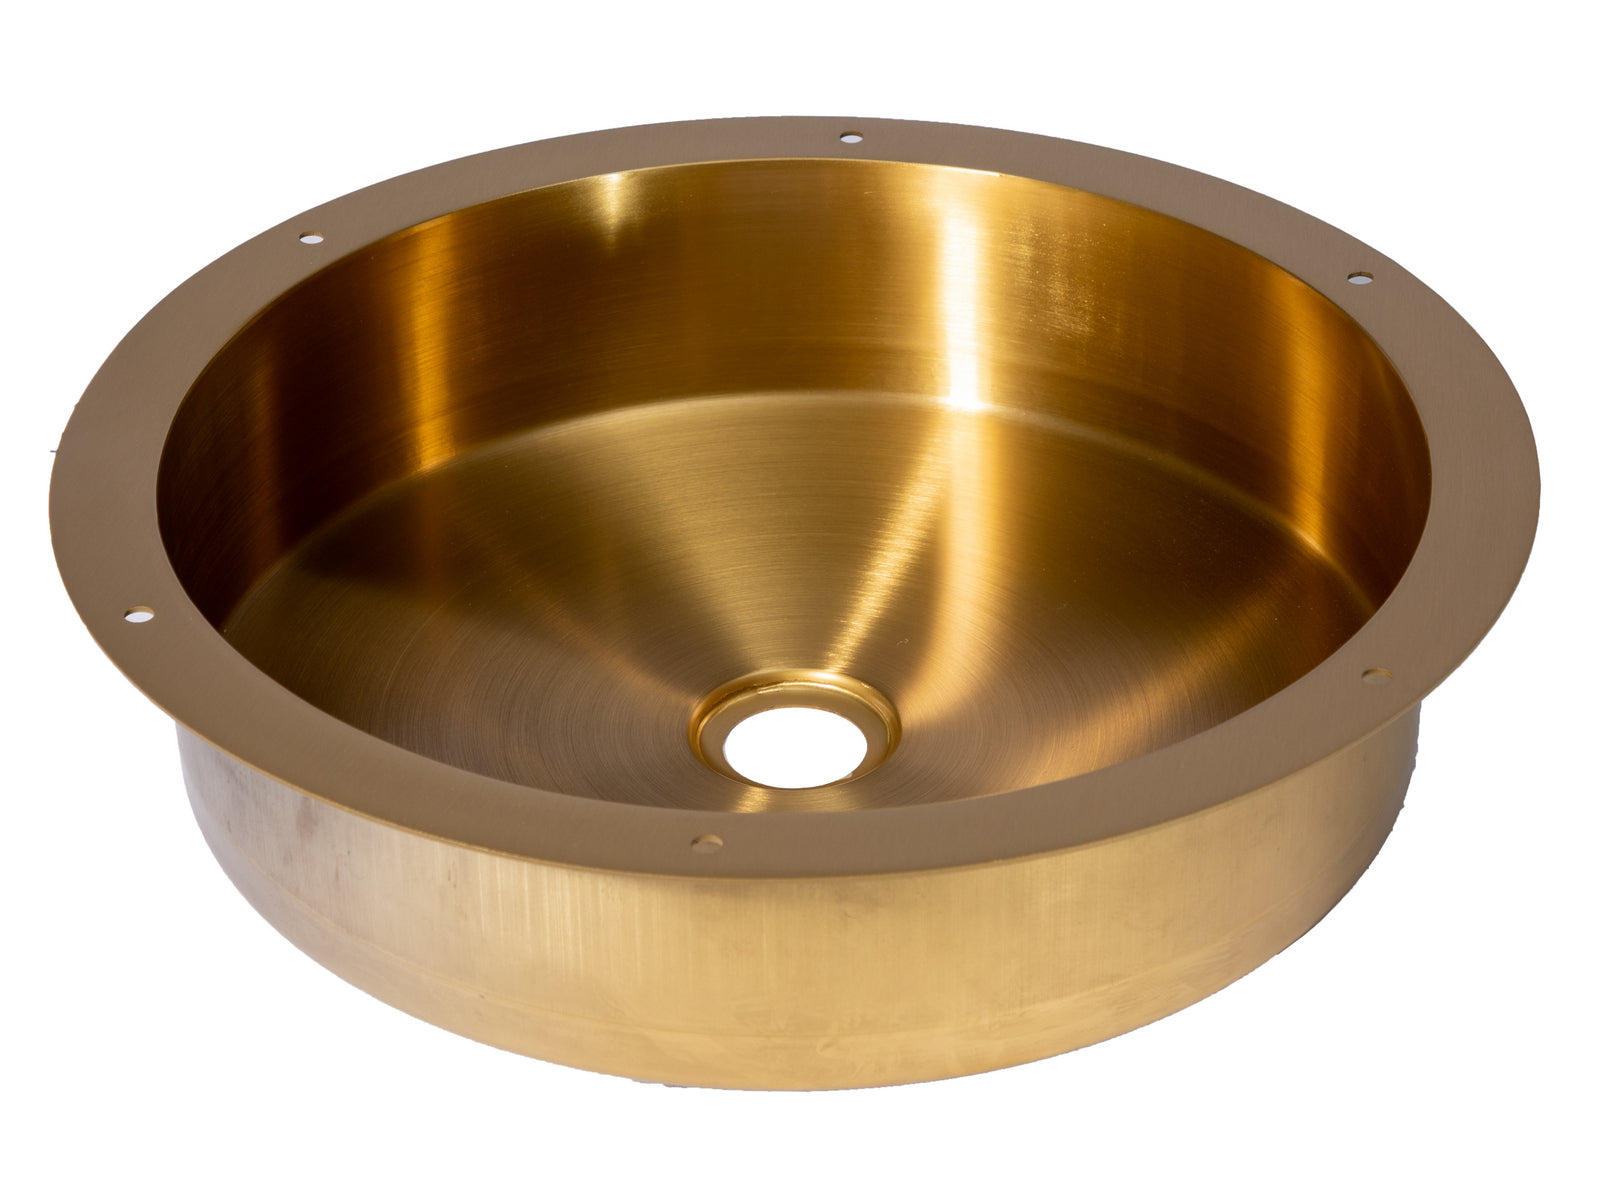 15" Round Stainless Steel Undermount Bathroom Sink with Drain in Gold